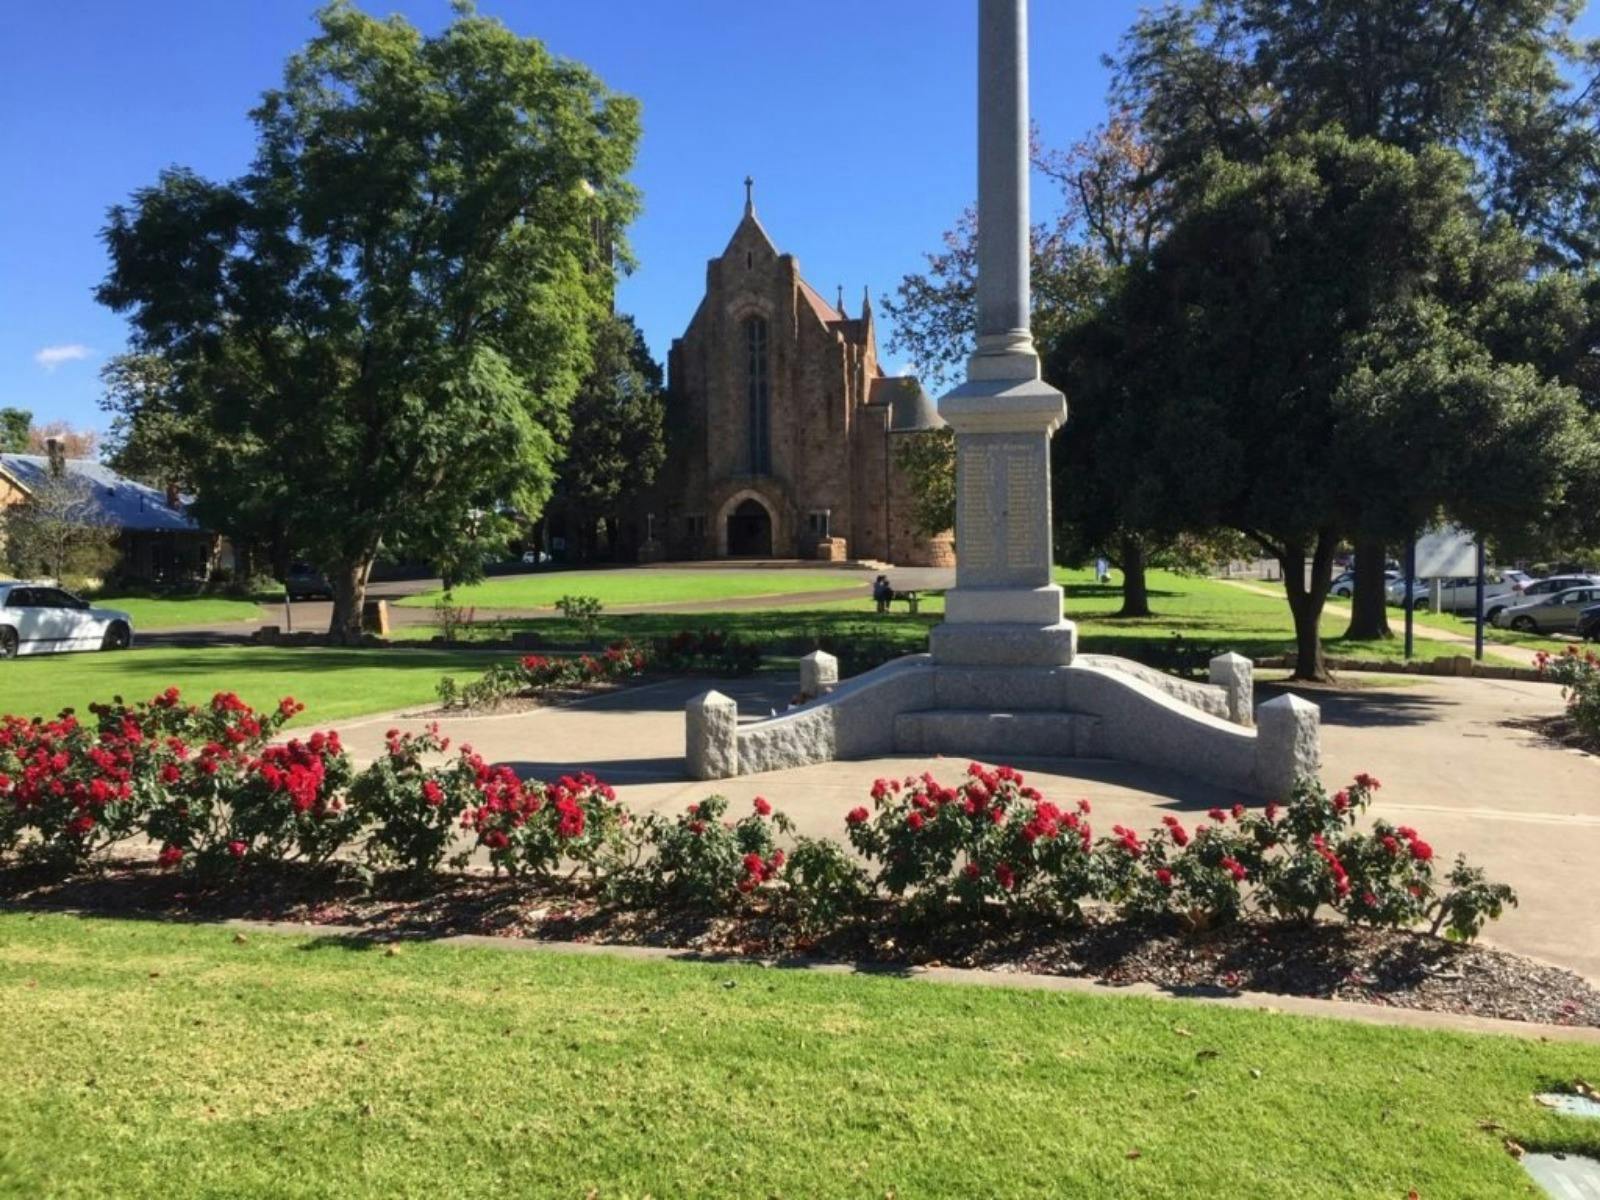 Memorial garden roses, cenotaph, church, trees, sunny sky, parked cars.